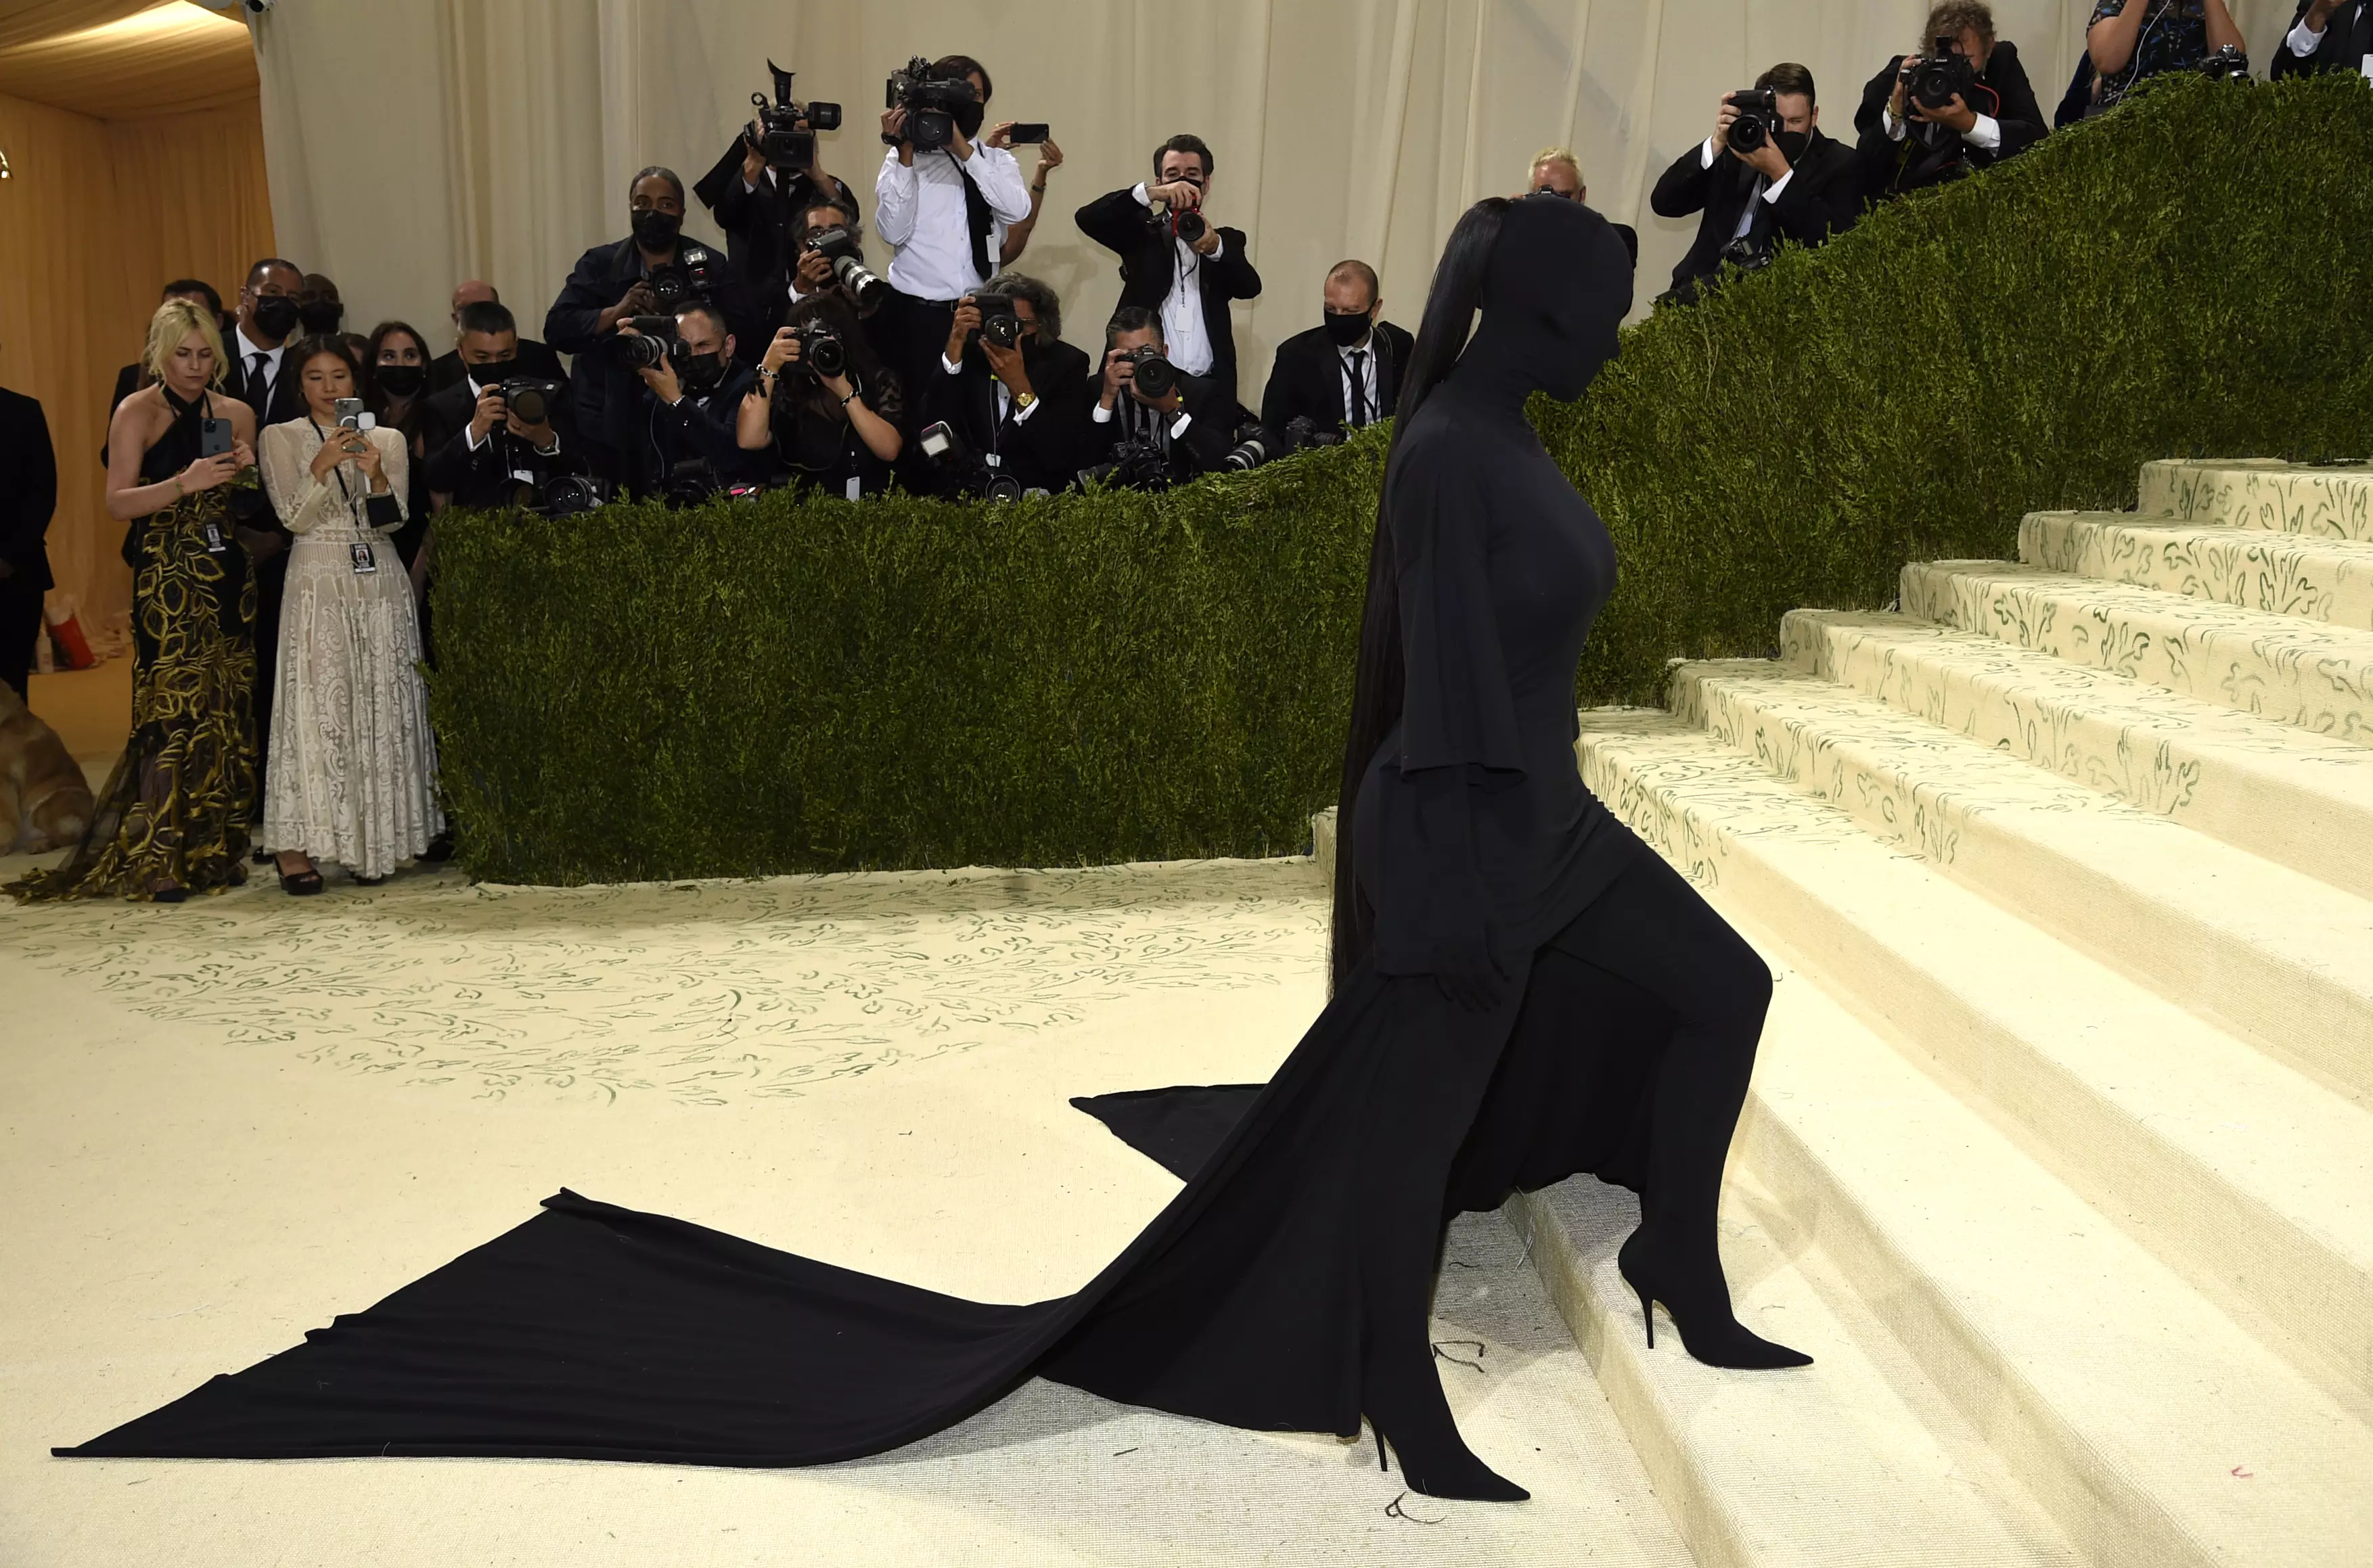 Kim Kardashian's all-black Balenciaga outfit caused quite the stir amongst fans.